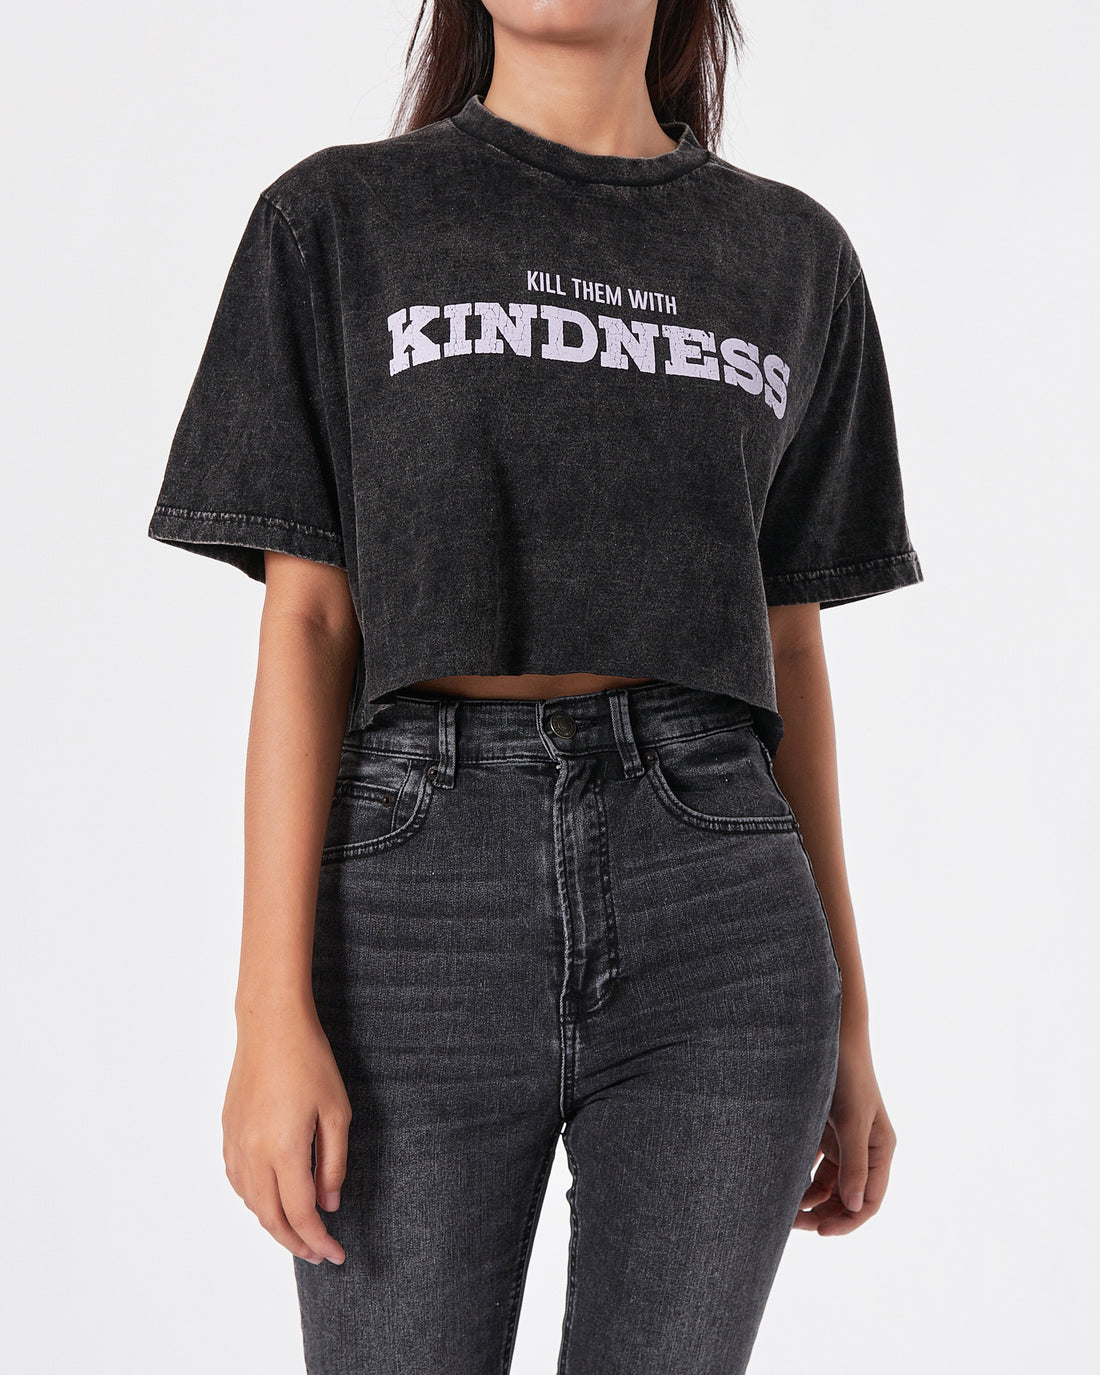 Pink Kindness Lady Black T-Shirt Crop Top 10.90